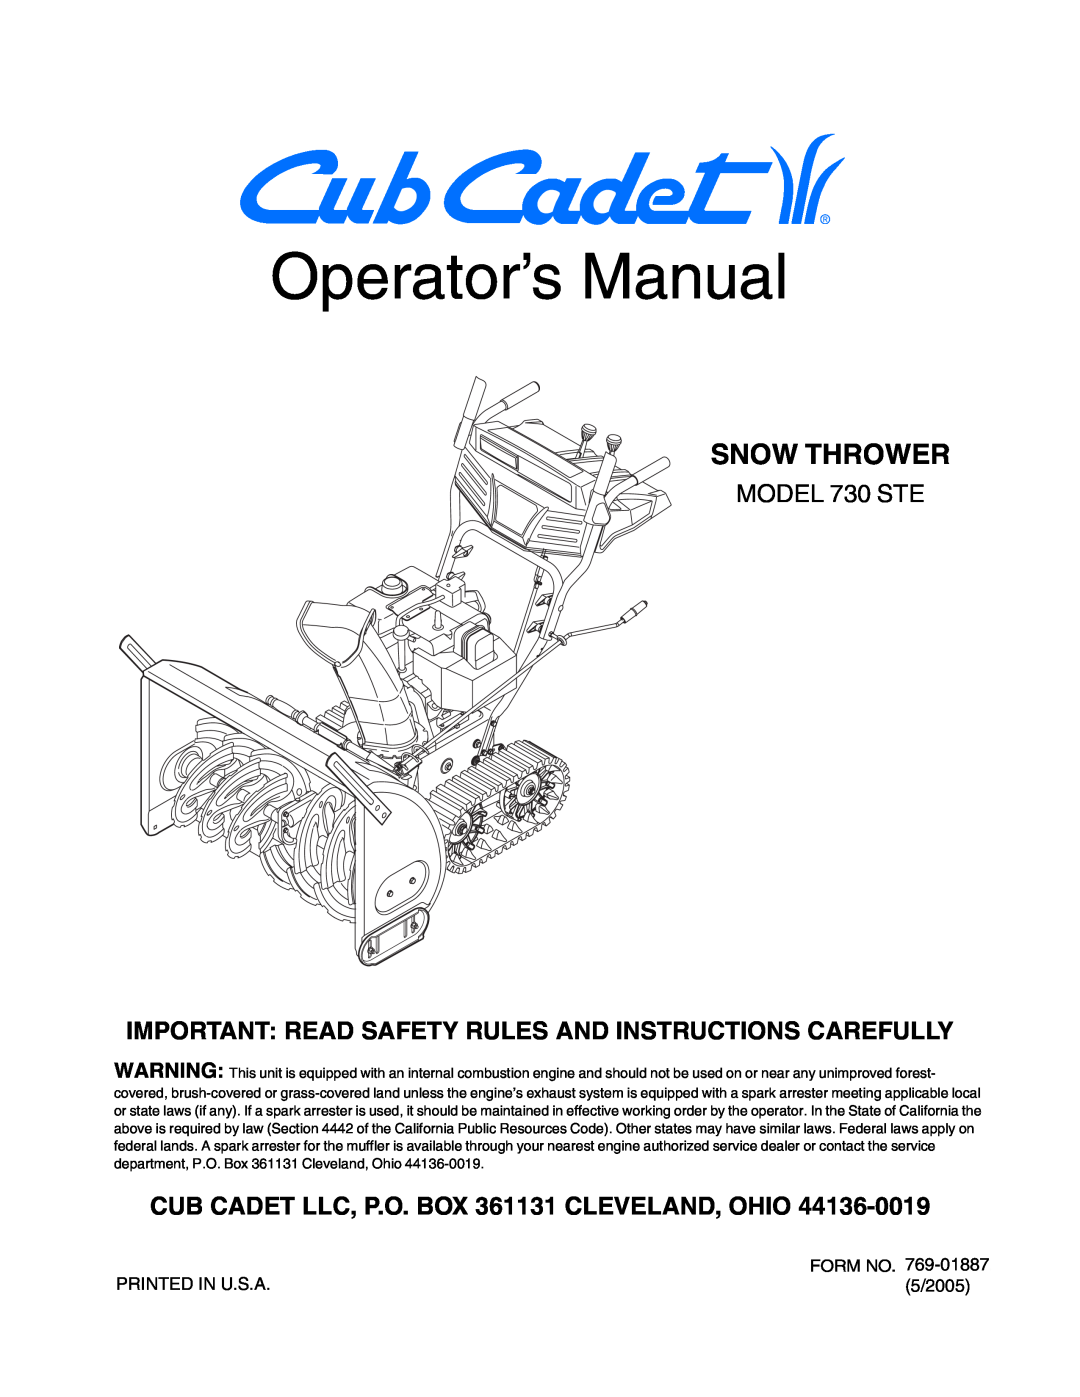 Cub Cadet manual Operator’s Manual, Snow Thrower, MODEL 730 STE, CUB CADET LLC, P.O. BOX 361131 CLEVELAND, OHIO 